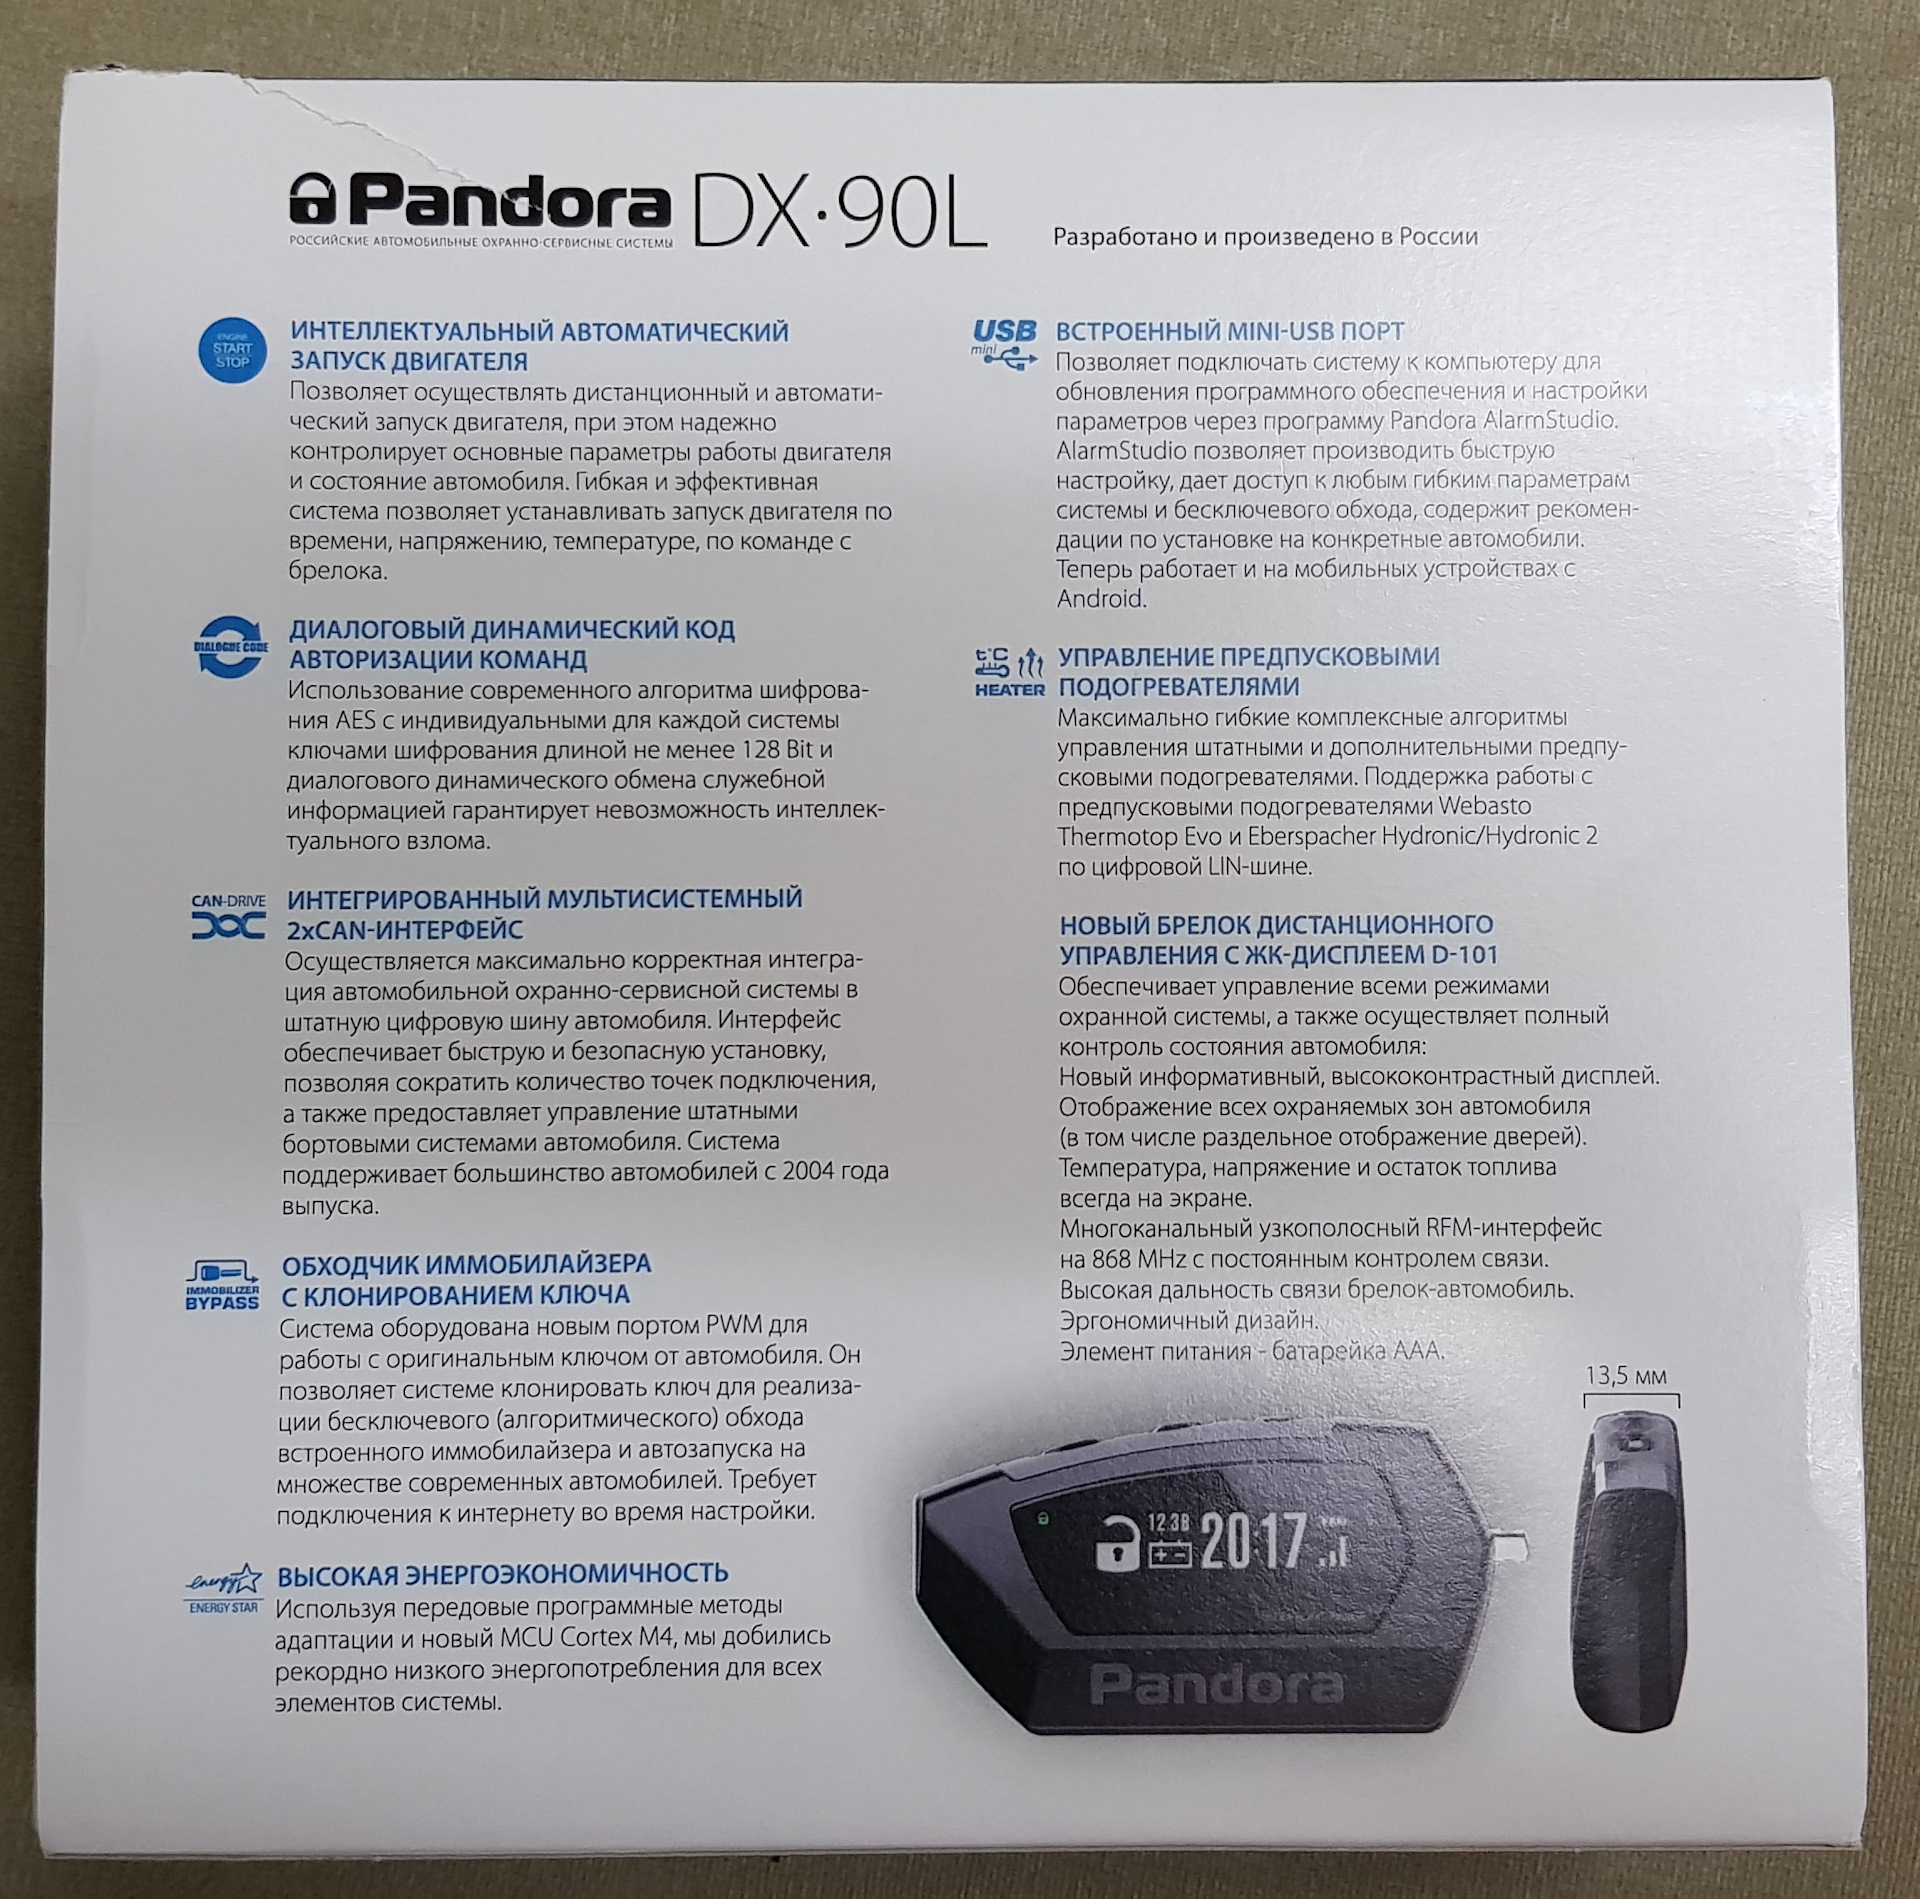 Звук сигнализации пандора. Сигнализация pandora DX 90. Сигнализация Пандора DX 90 L. Брелок pandora DX 90. Пандора dx90.